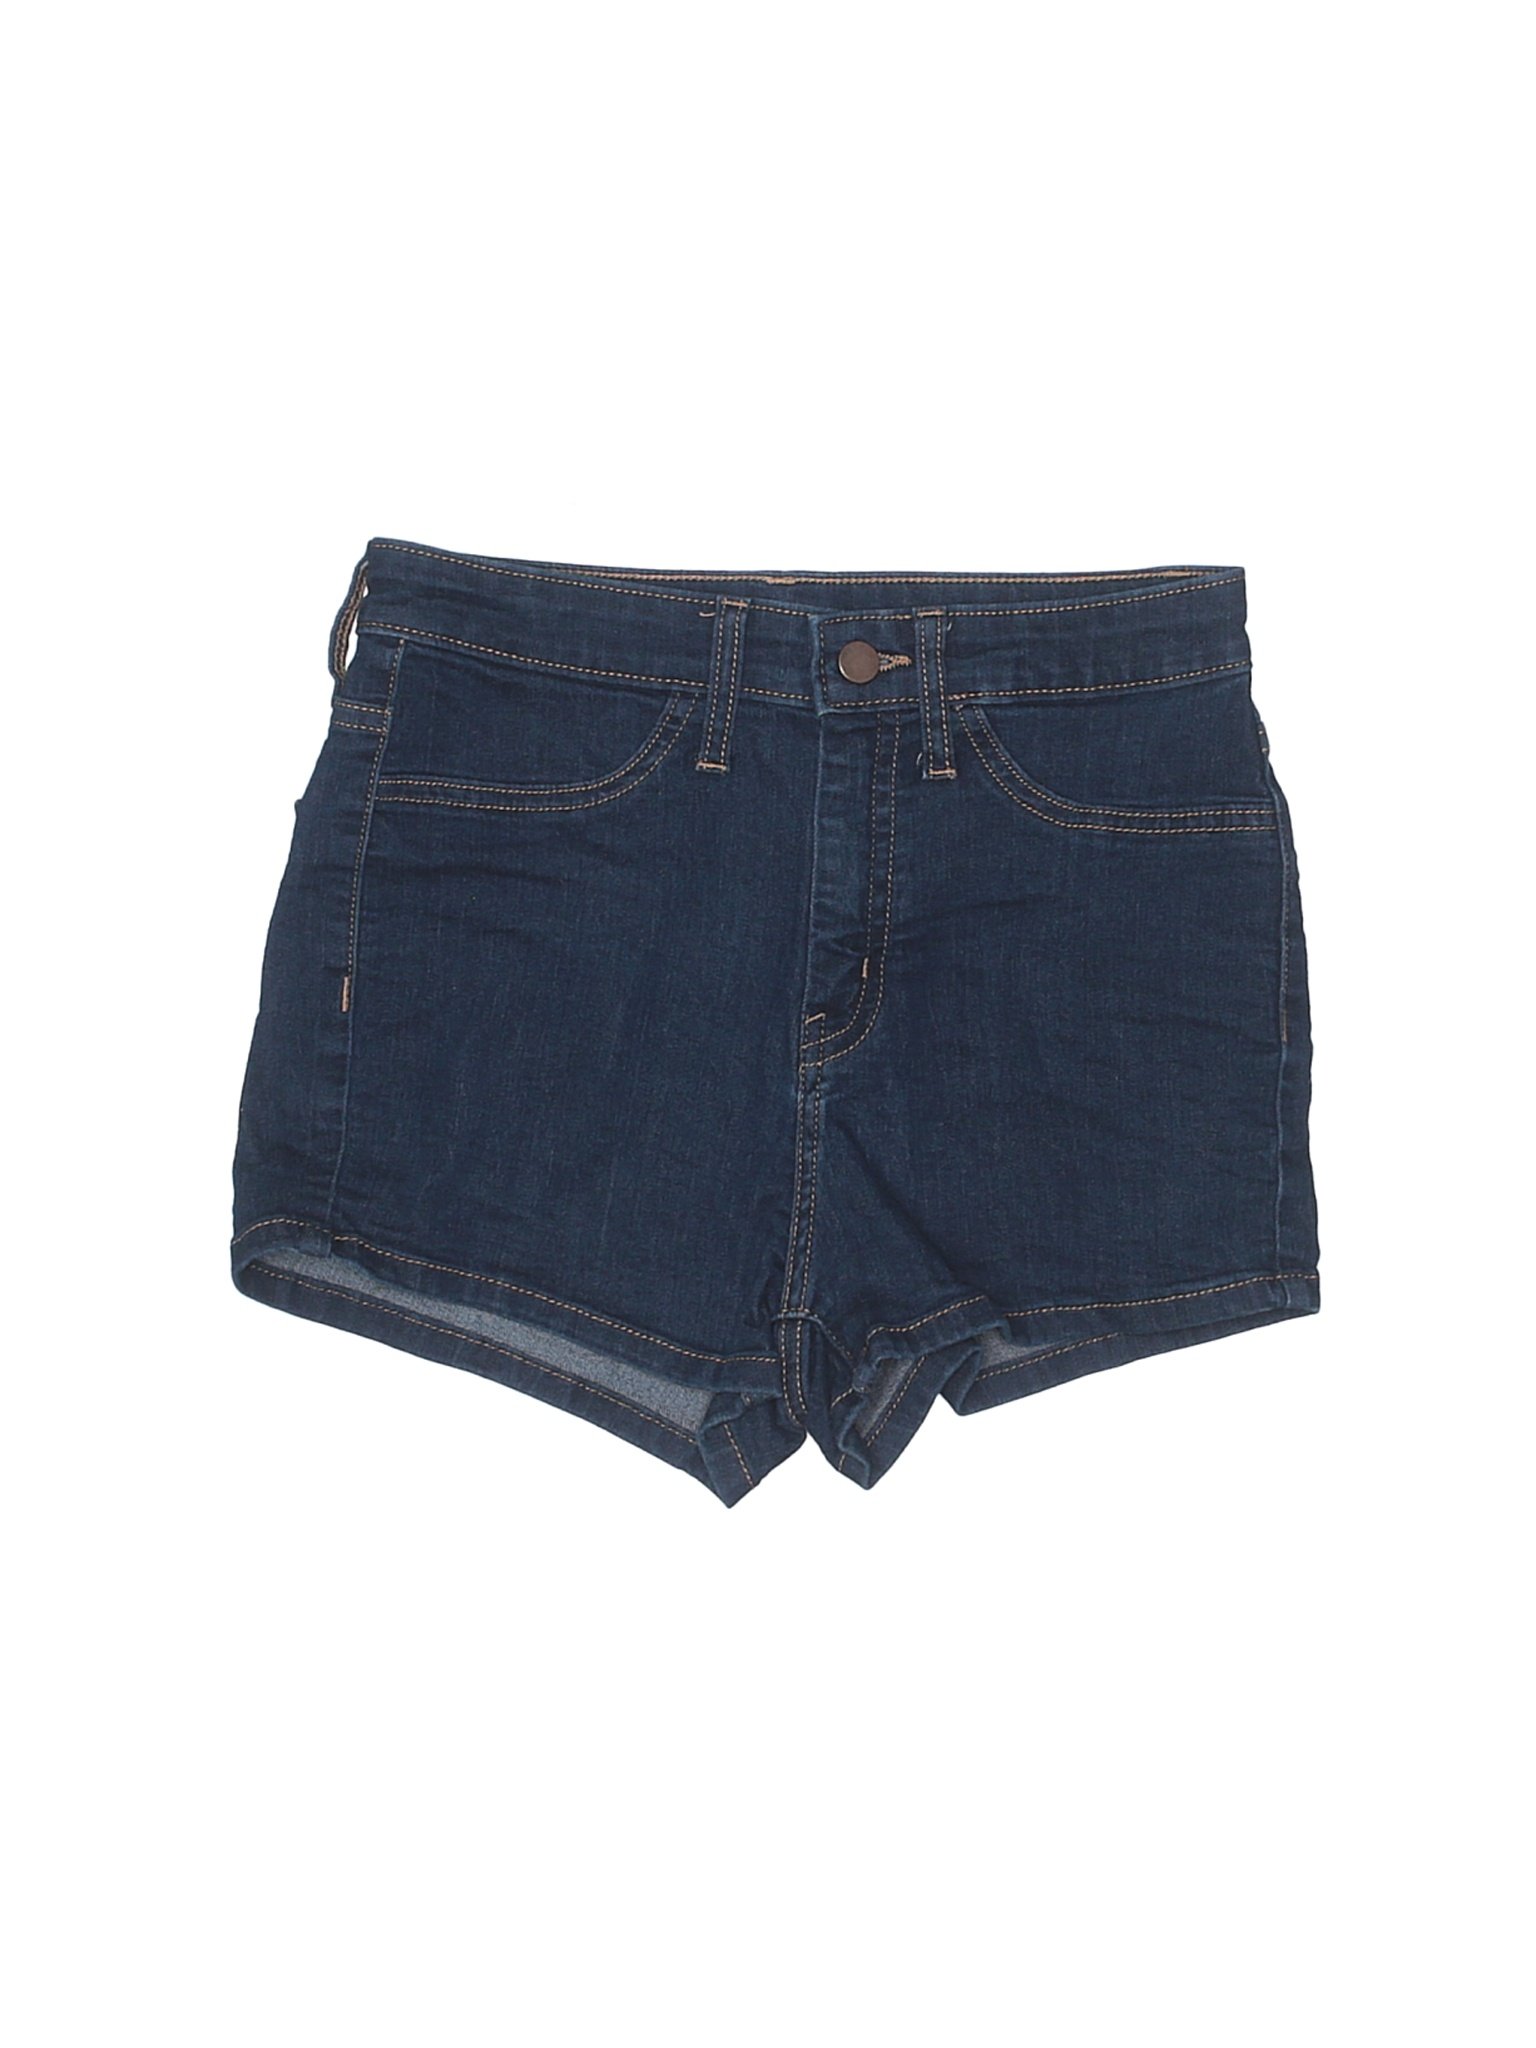 Wild Fable Women Blue Denim Shorts 6 | eBay